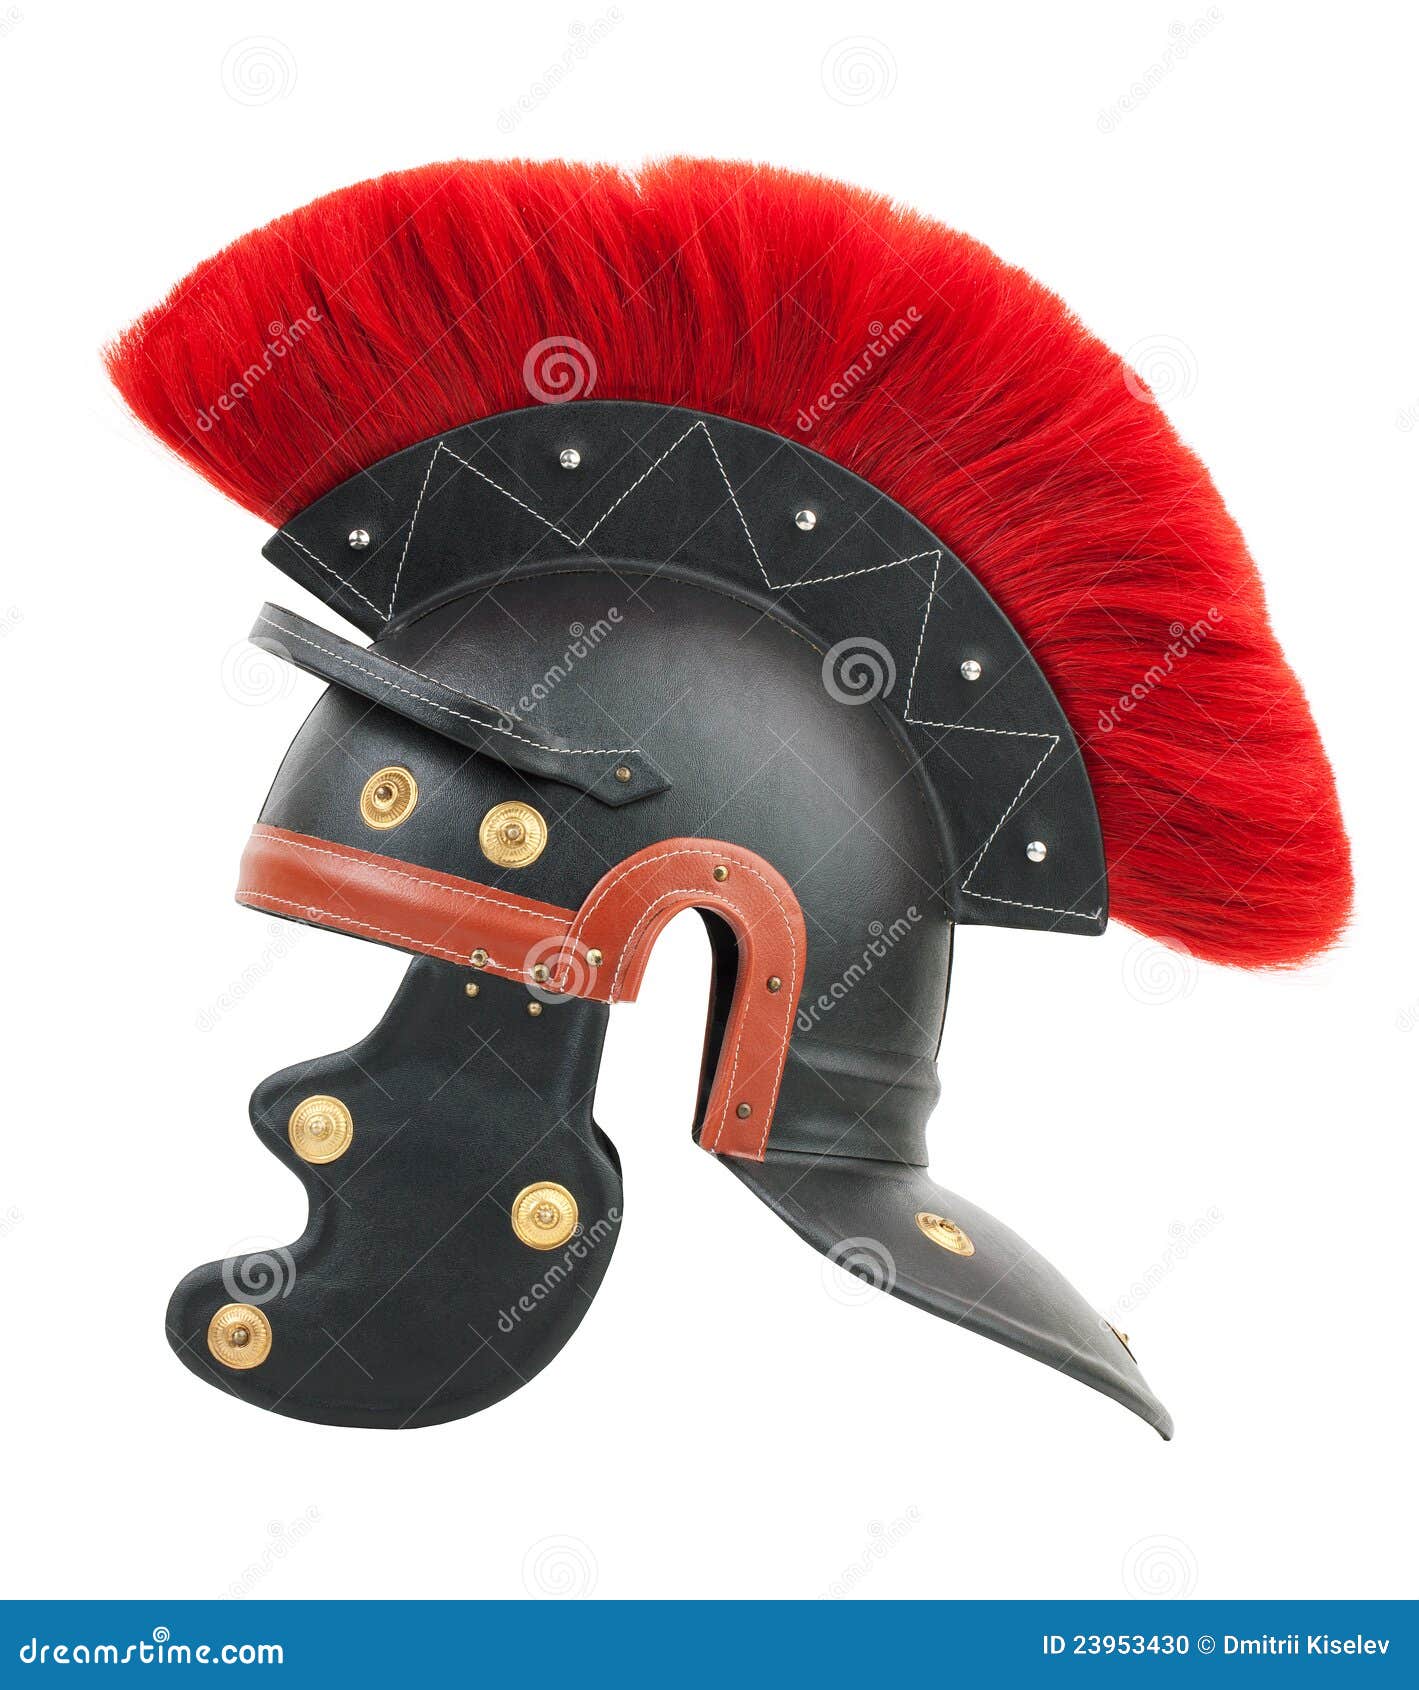 simulation of a roman centurion helmet